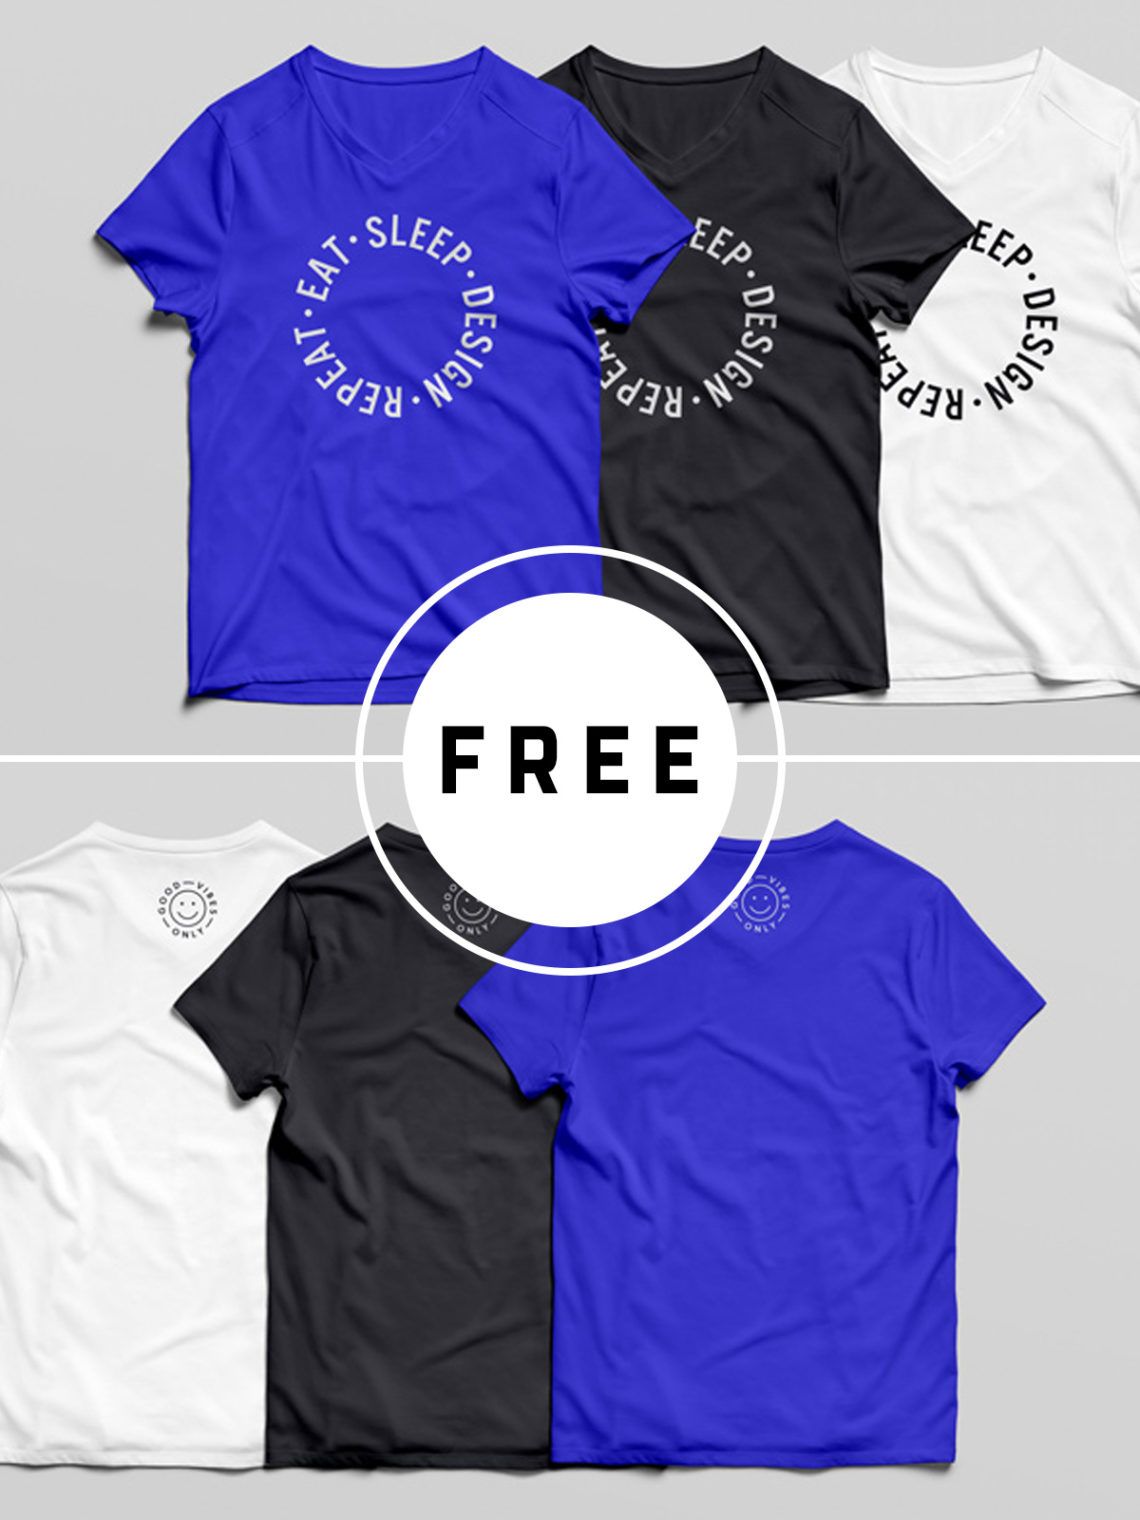 25 Multipurpose Free T-Shirt Mockups For Your Breathtaking Designs